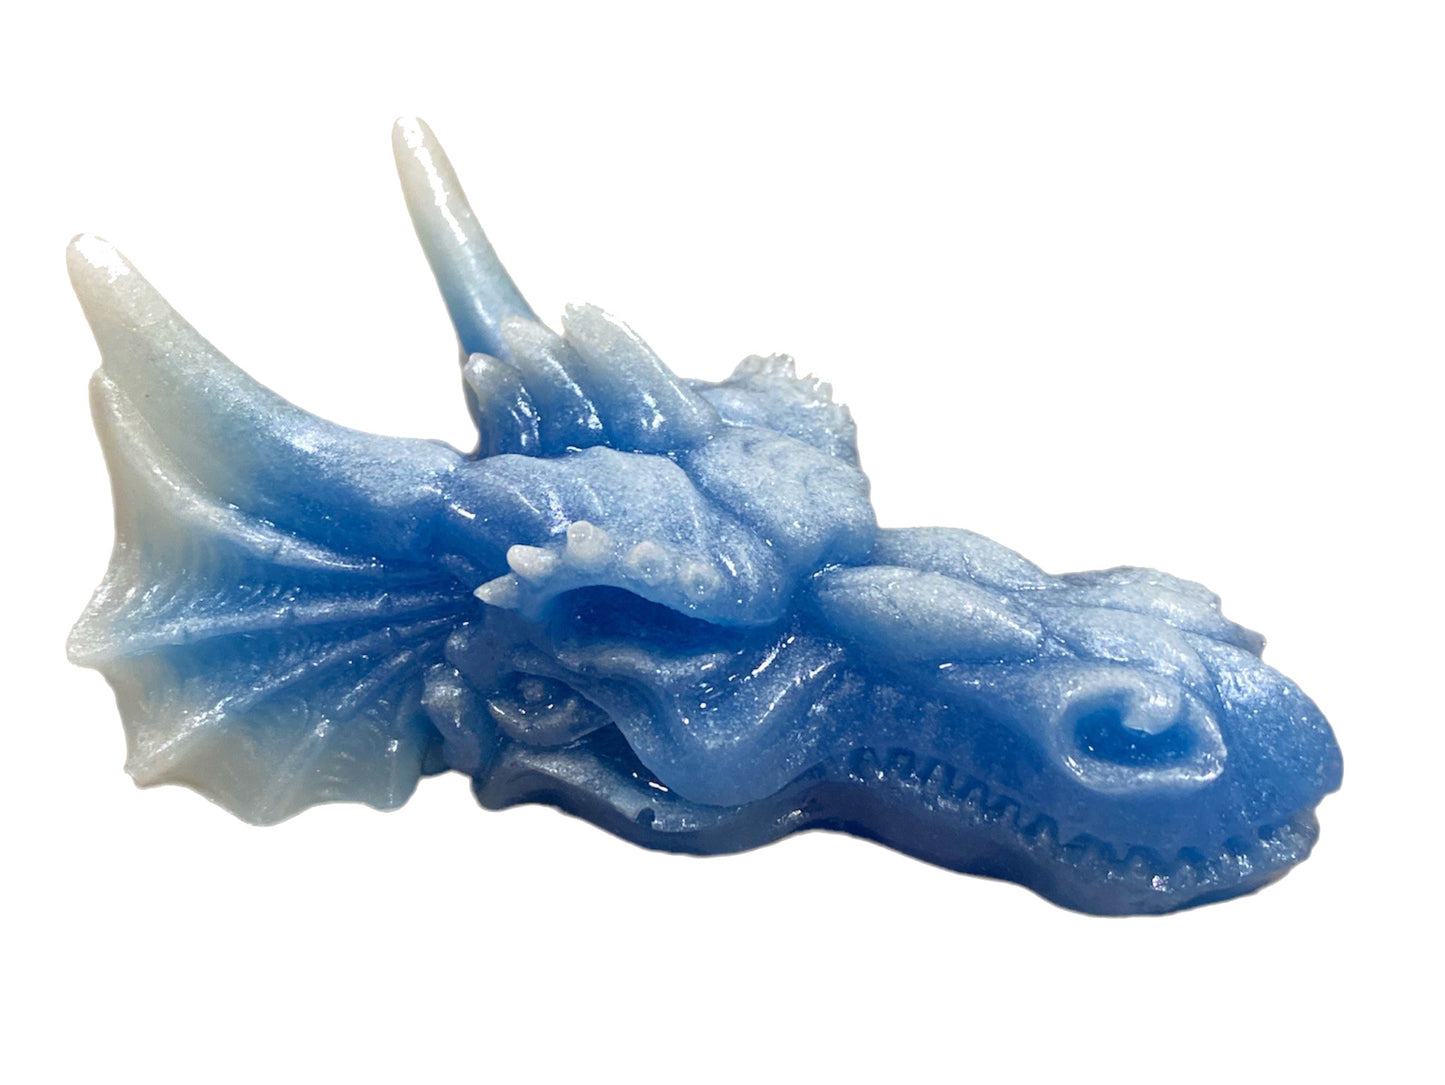 Dragon Head - Blue Luminous Resin - 3.5 x 2.5 inches - China - NEW1022